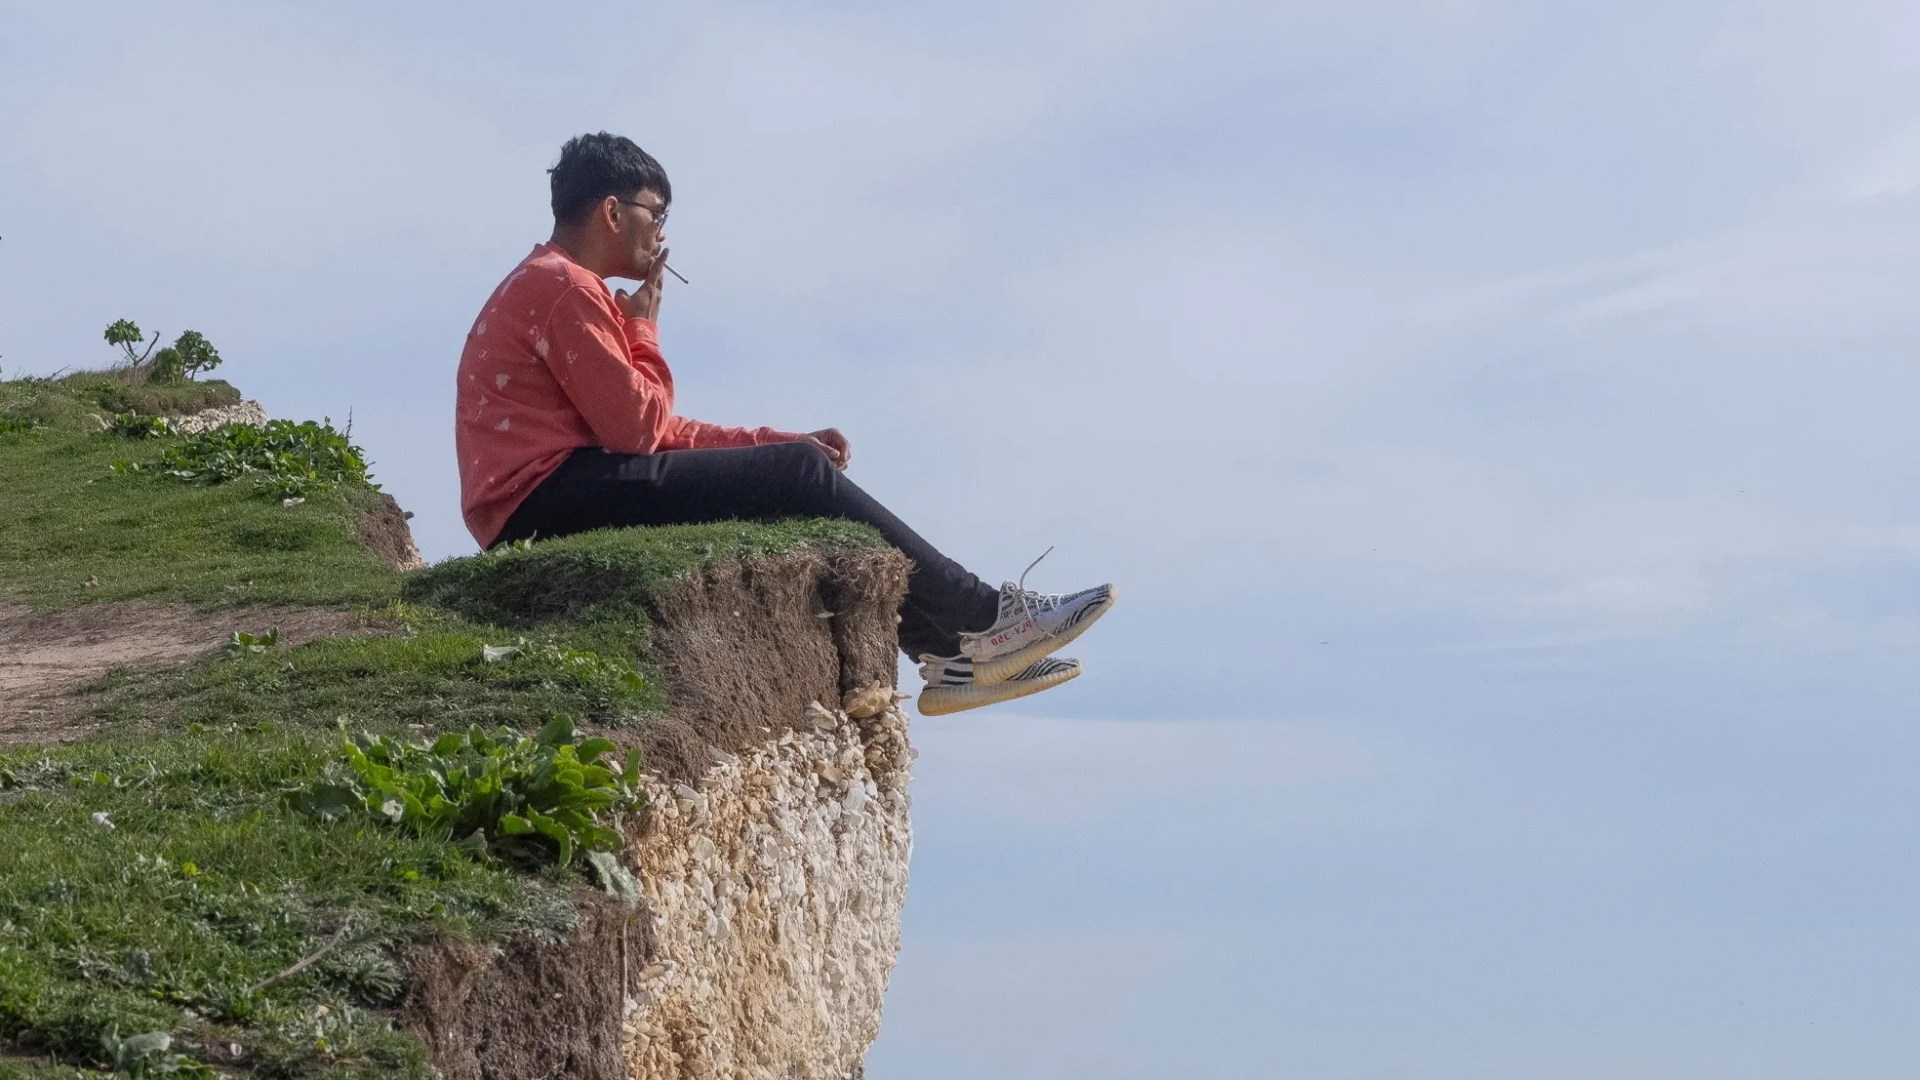 Smoker dangles legs over edge of 400ft cliff despite warning it’s crumbling [Video]